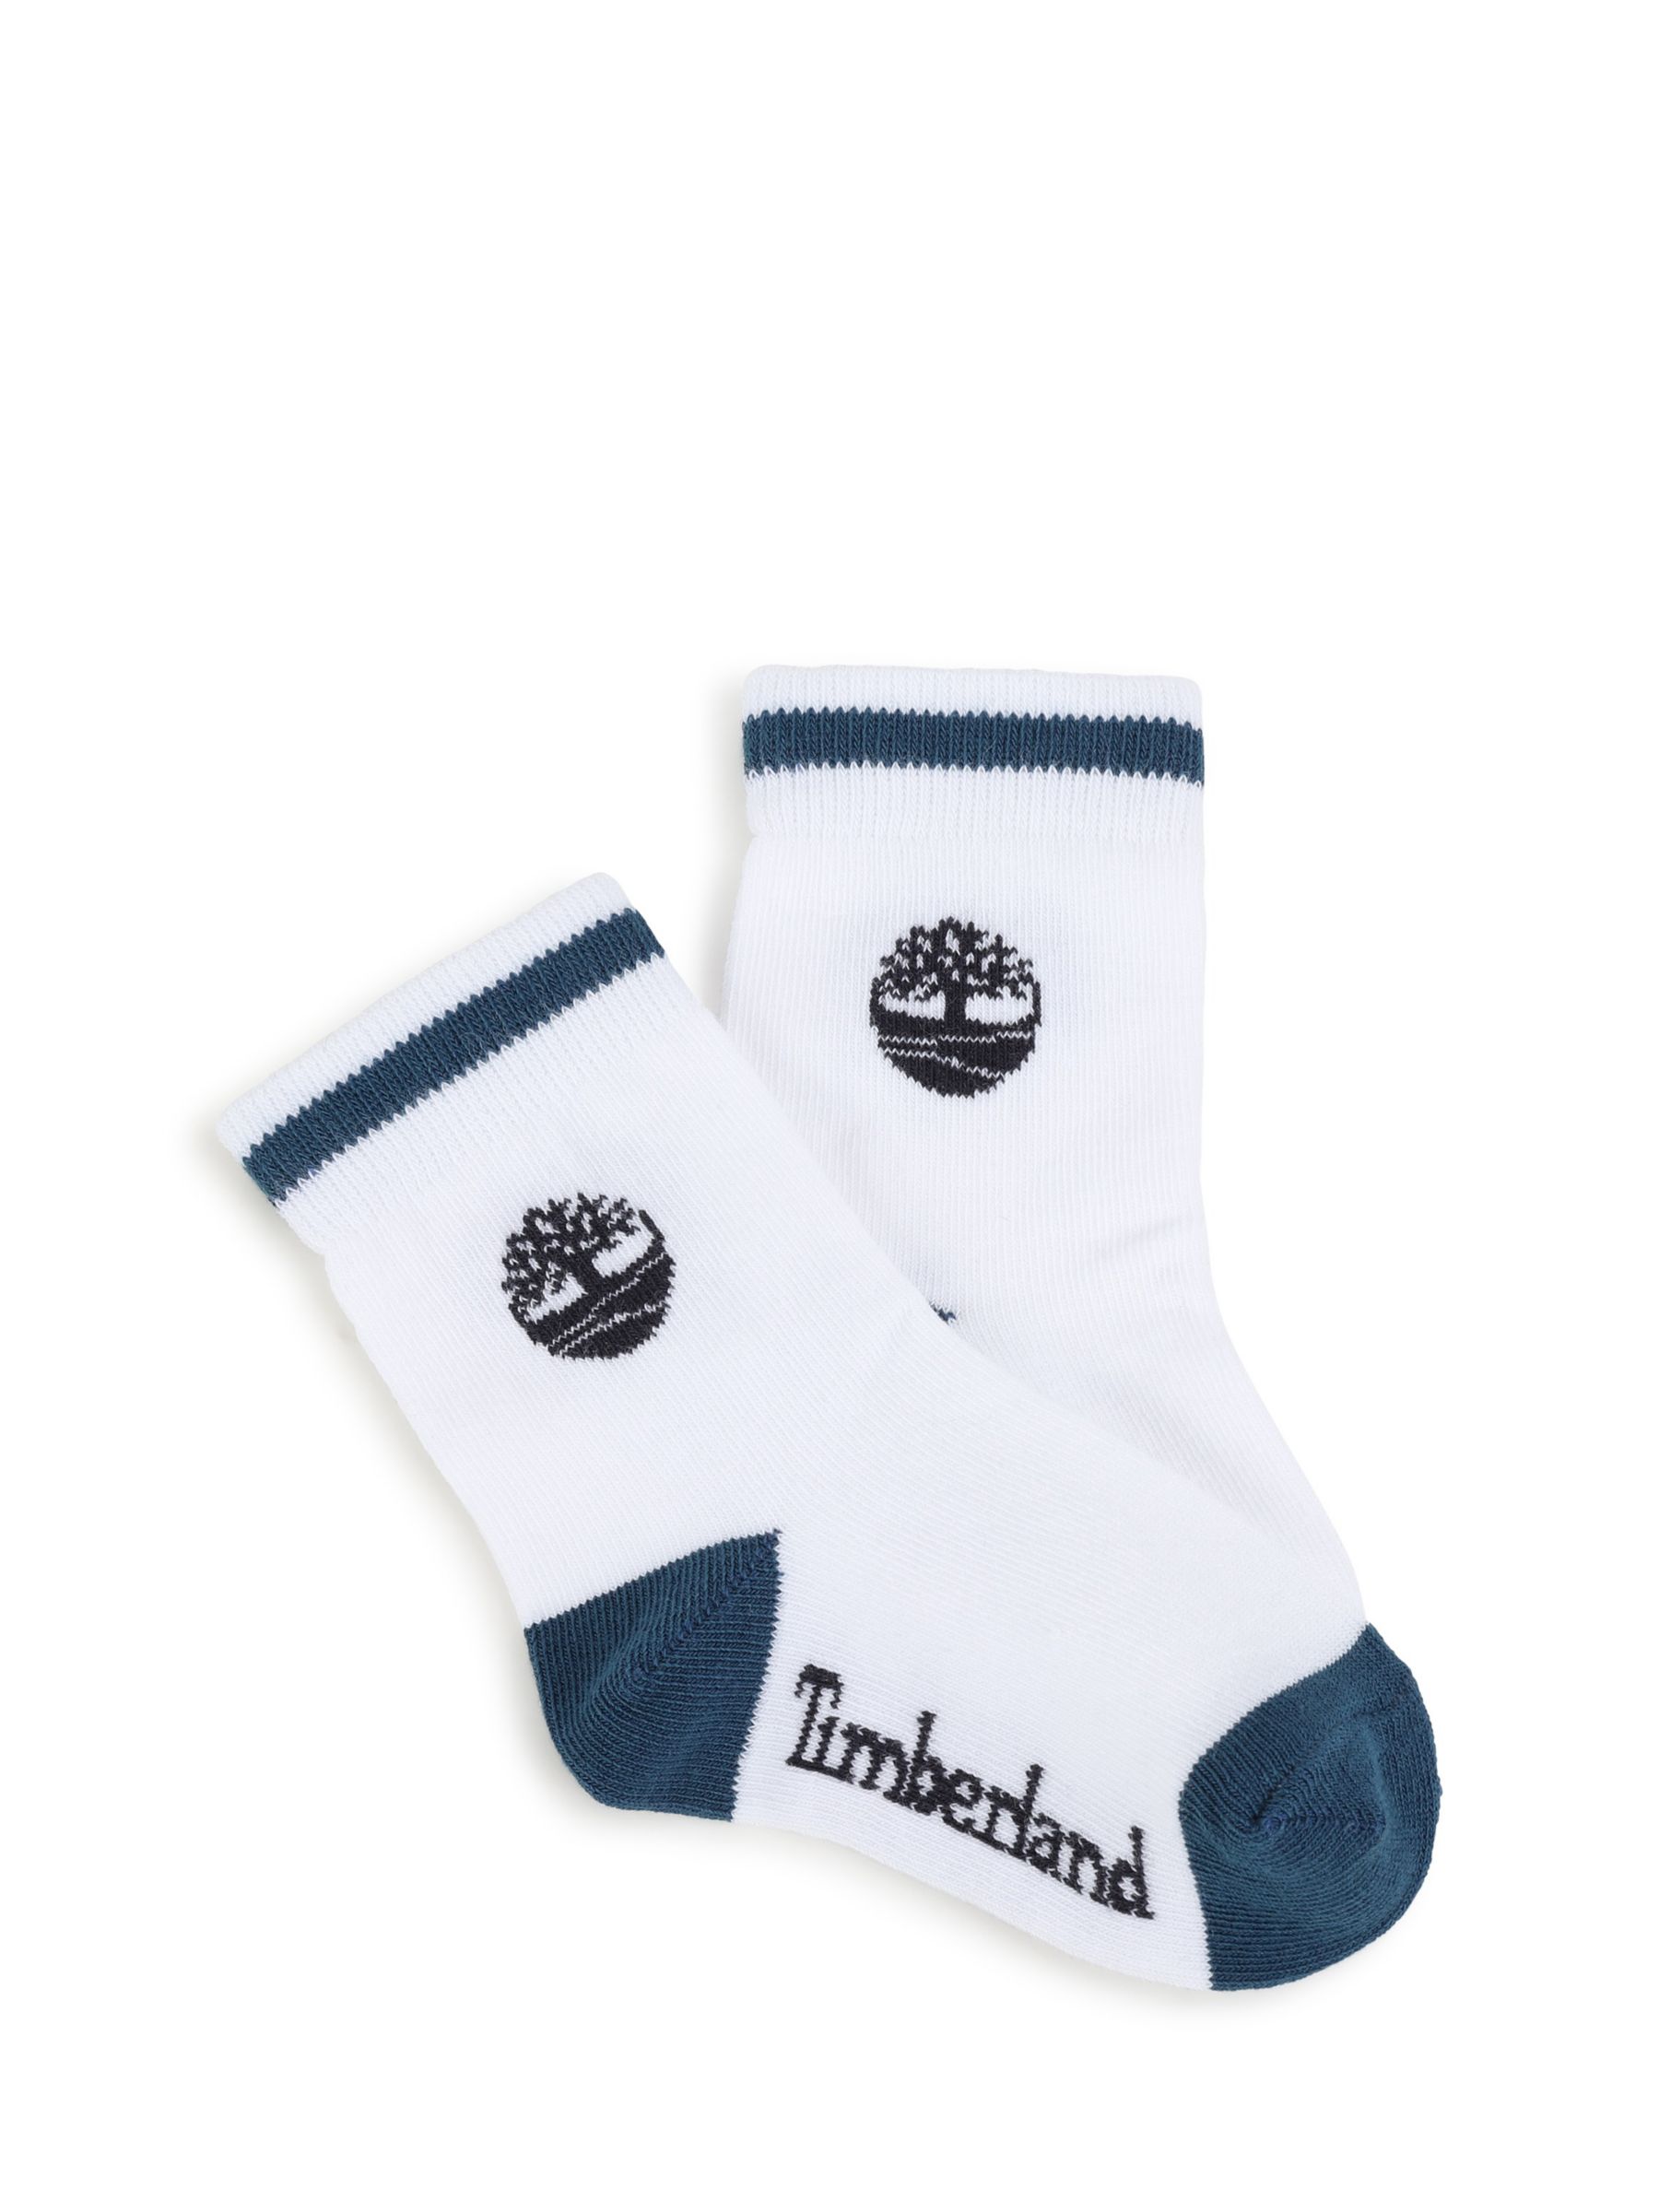 Timberland Baby Logo Socks, Pack Of 3, Multi, 4-5 years